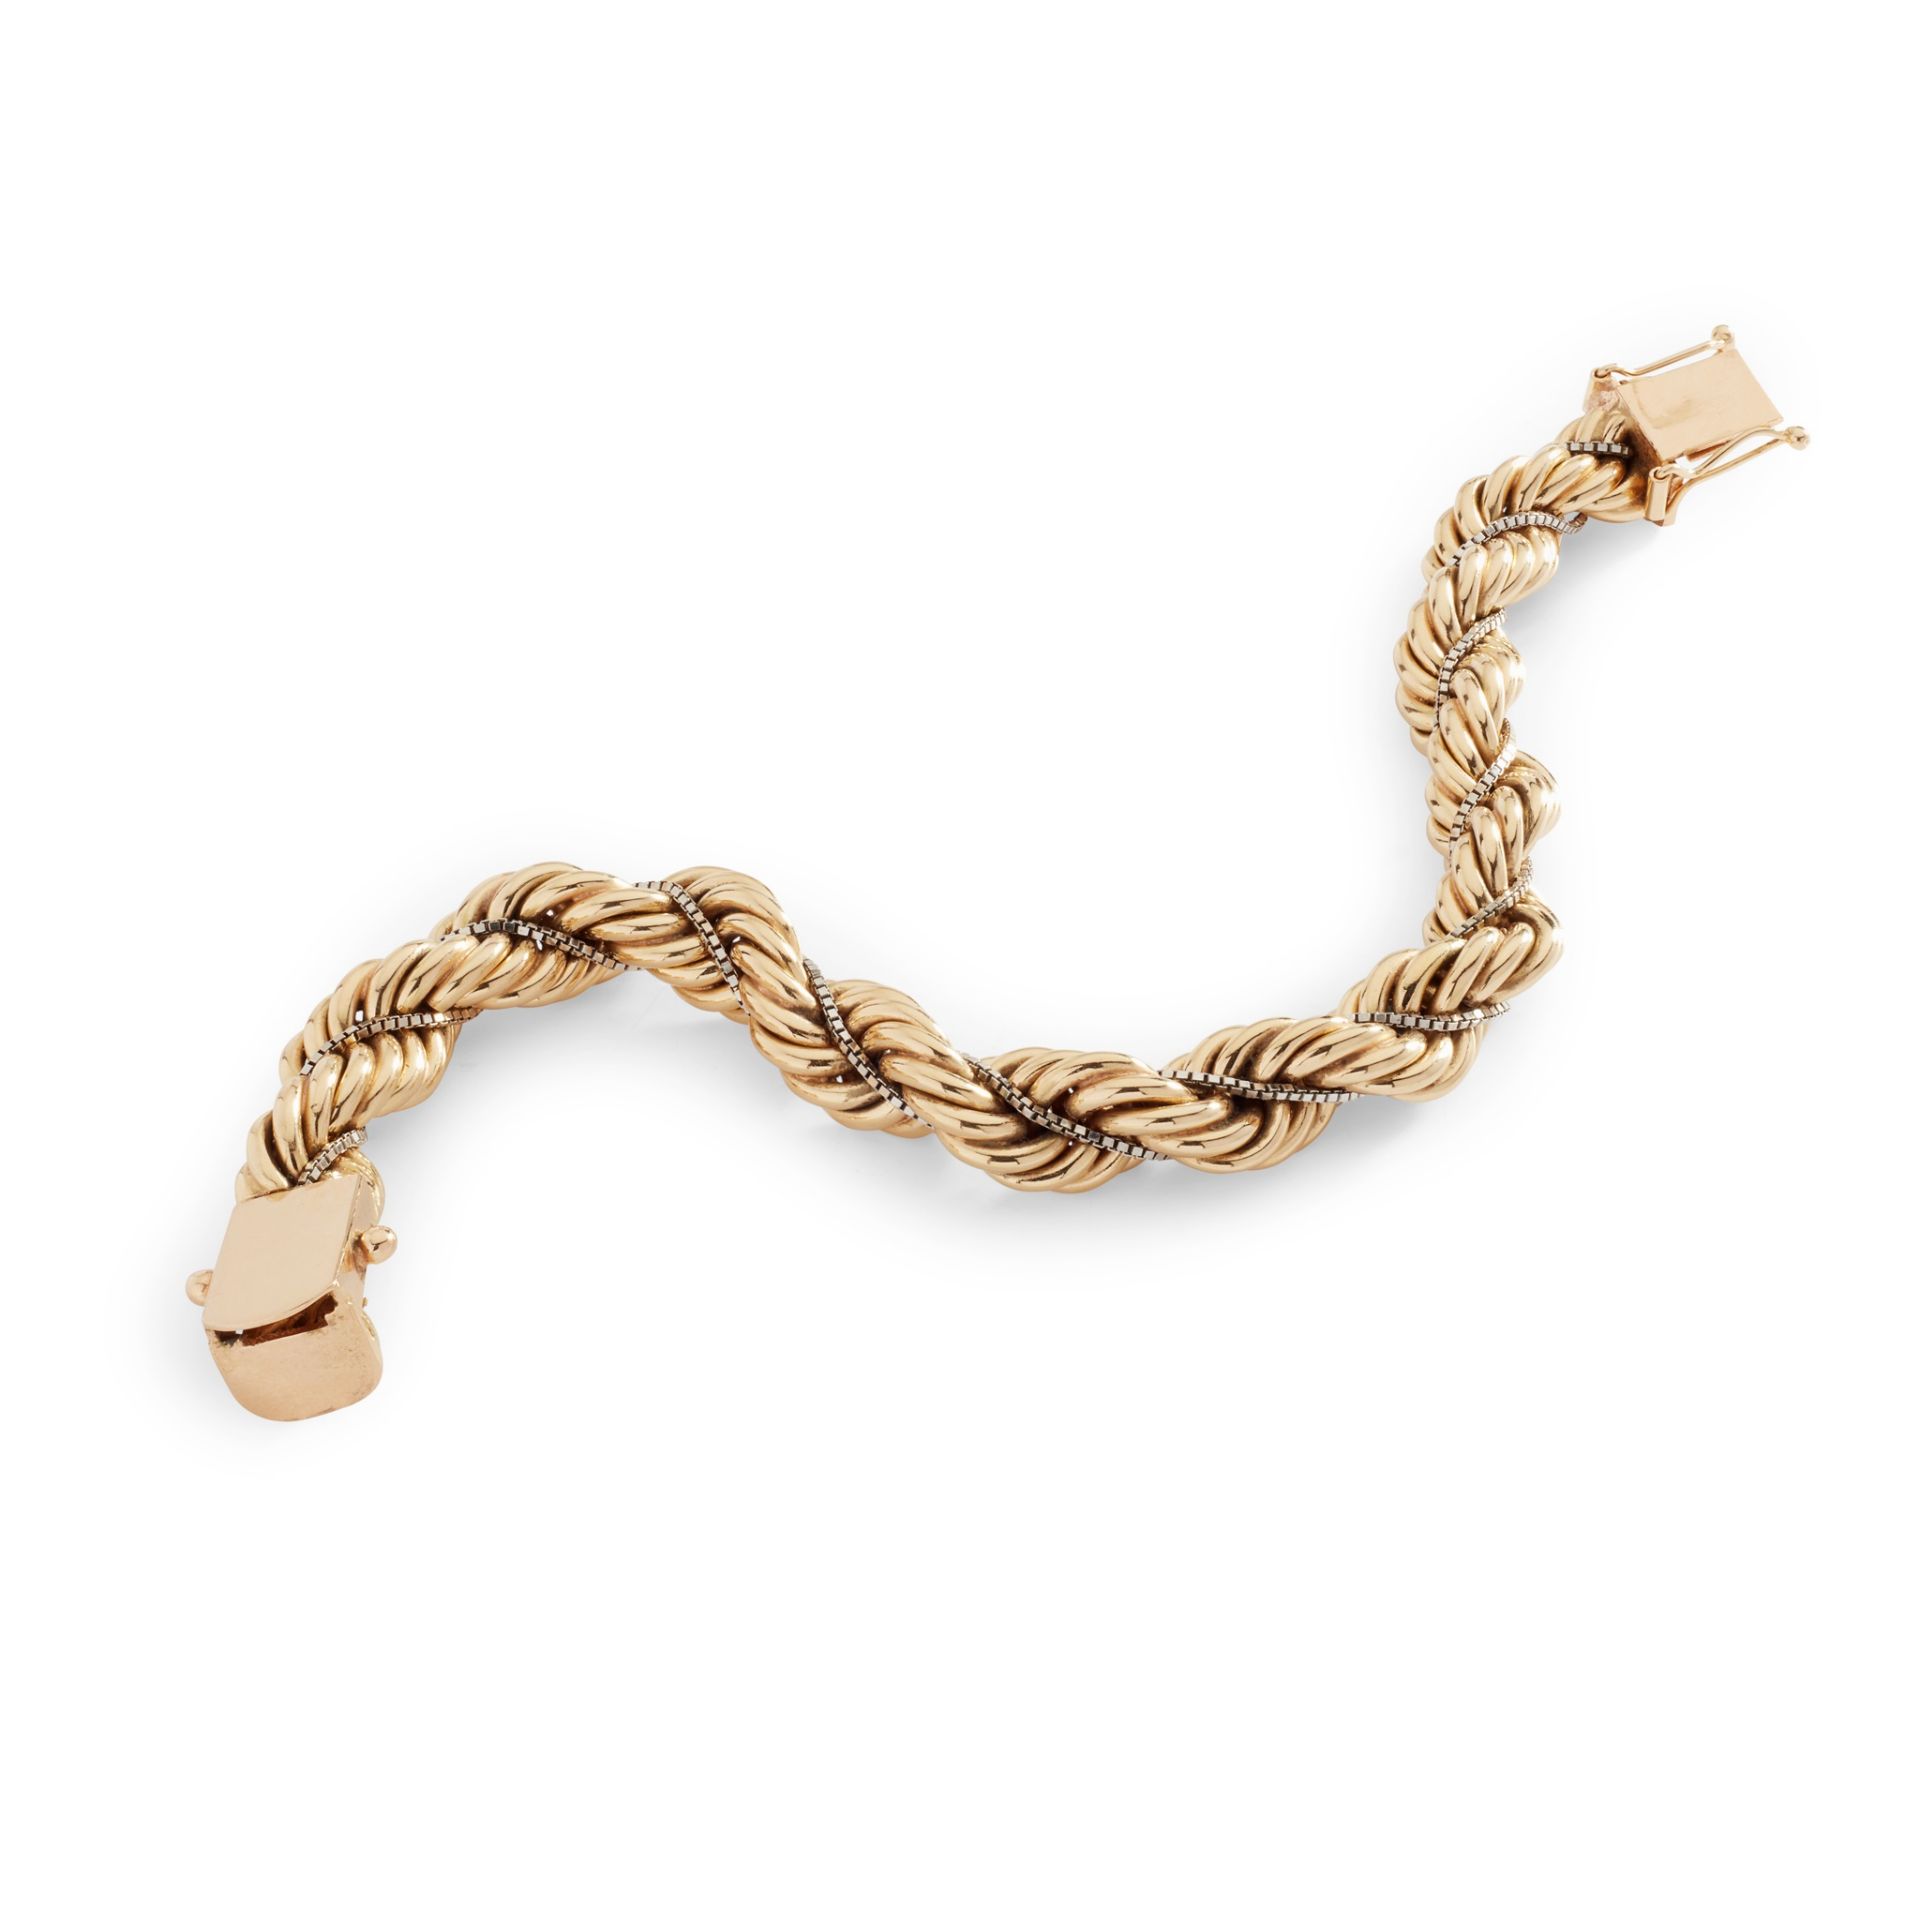 A large rope-twist bracelet